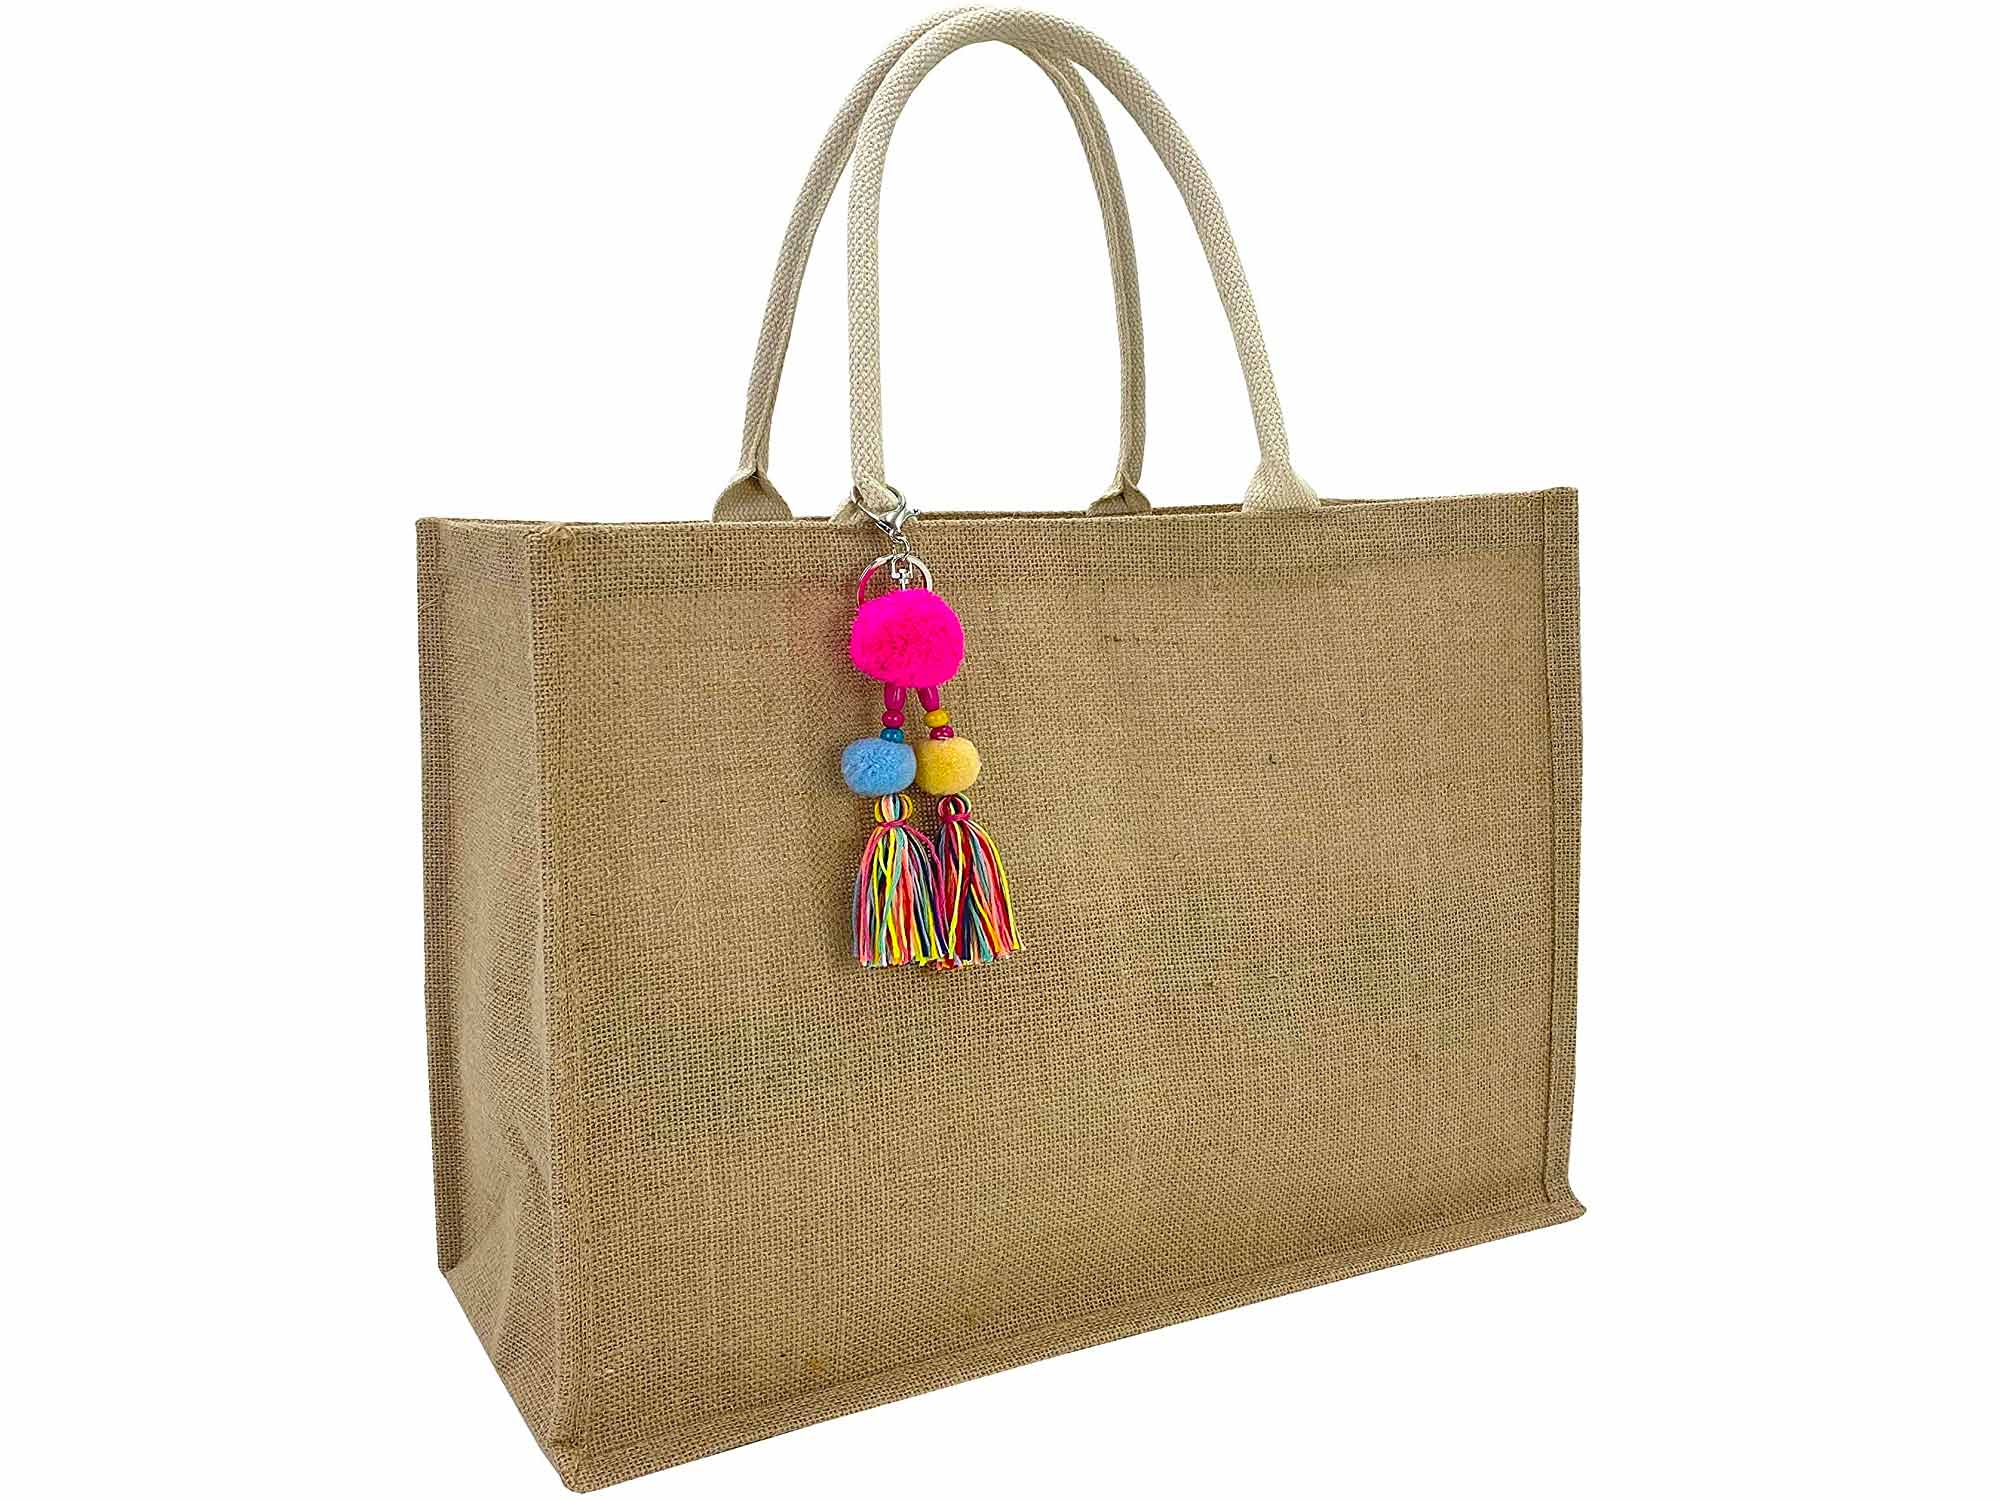 Hibala Woven Large Beach Bag Straw Bag Beach Tote Handmade Weaving Shoulder Bag Tassel Bag Handbag